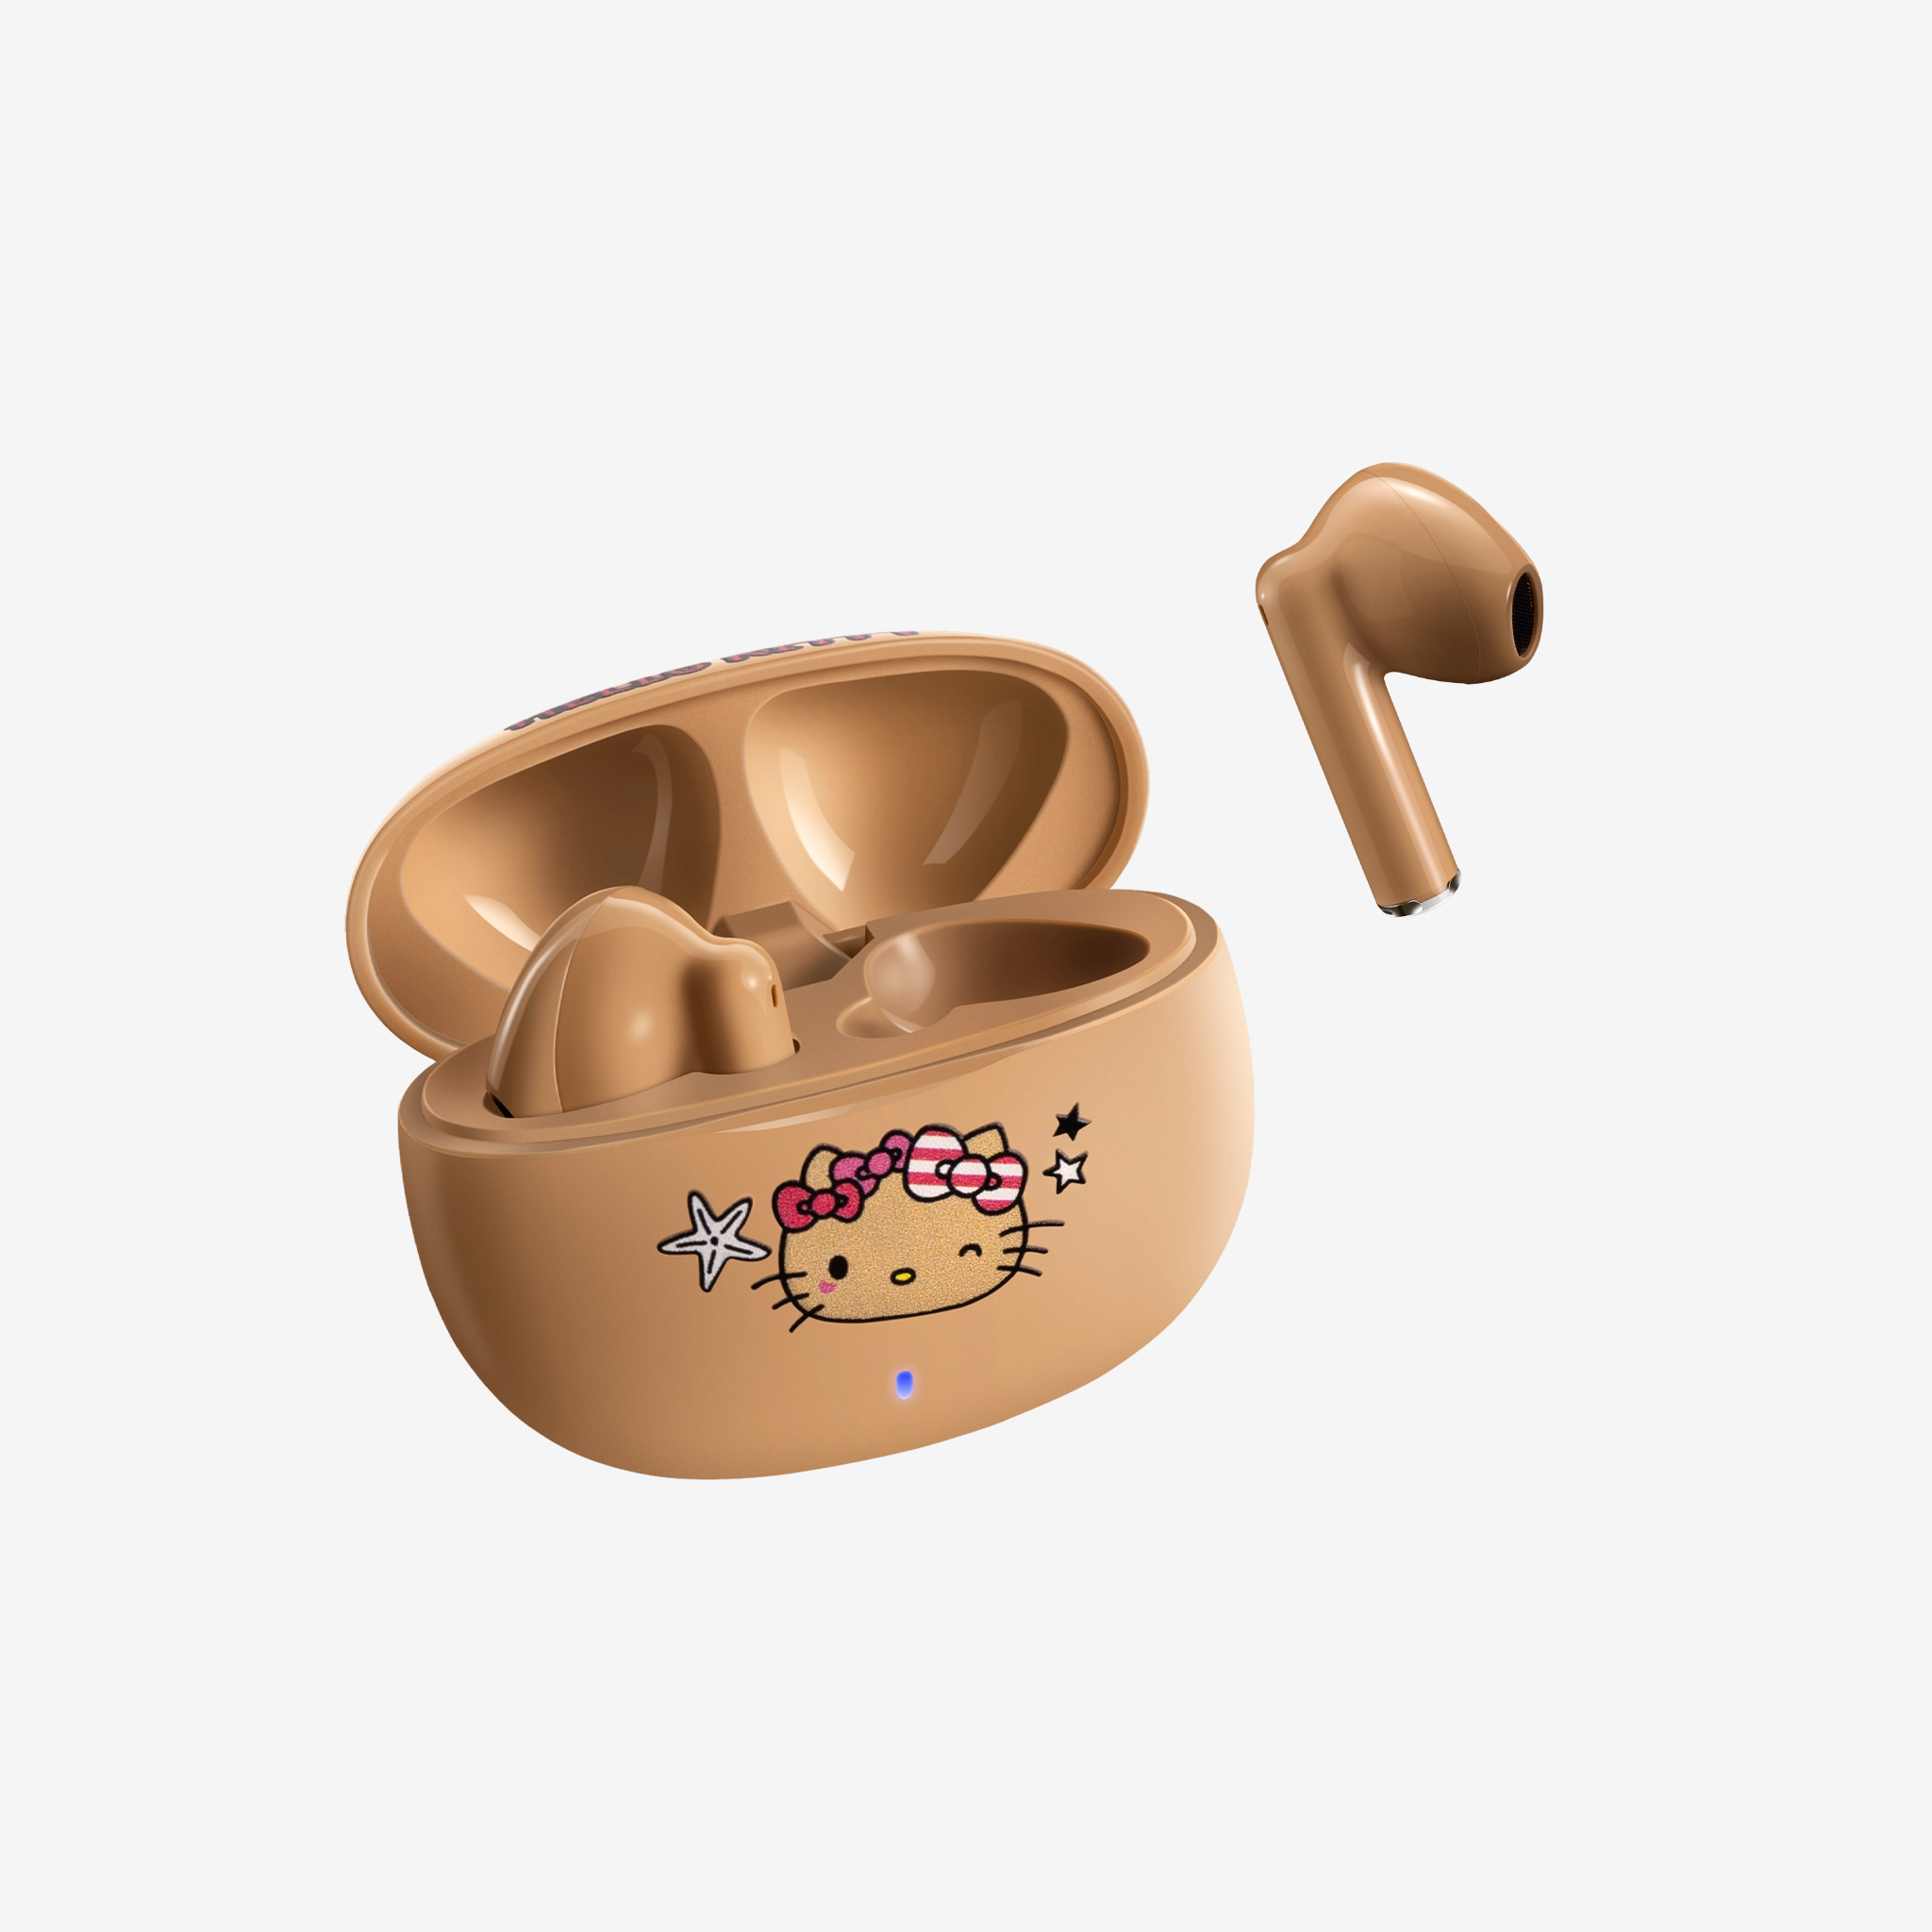 MarTUBE Hello Kitty Beach Music Auriculares para Android e iOS